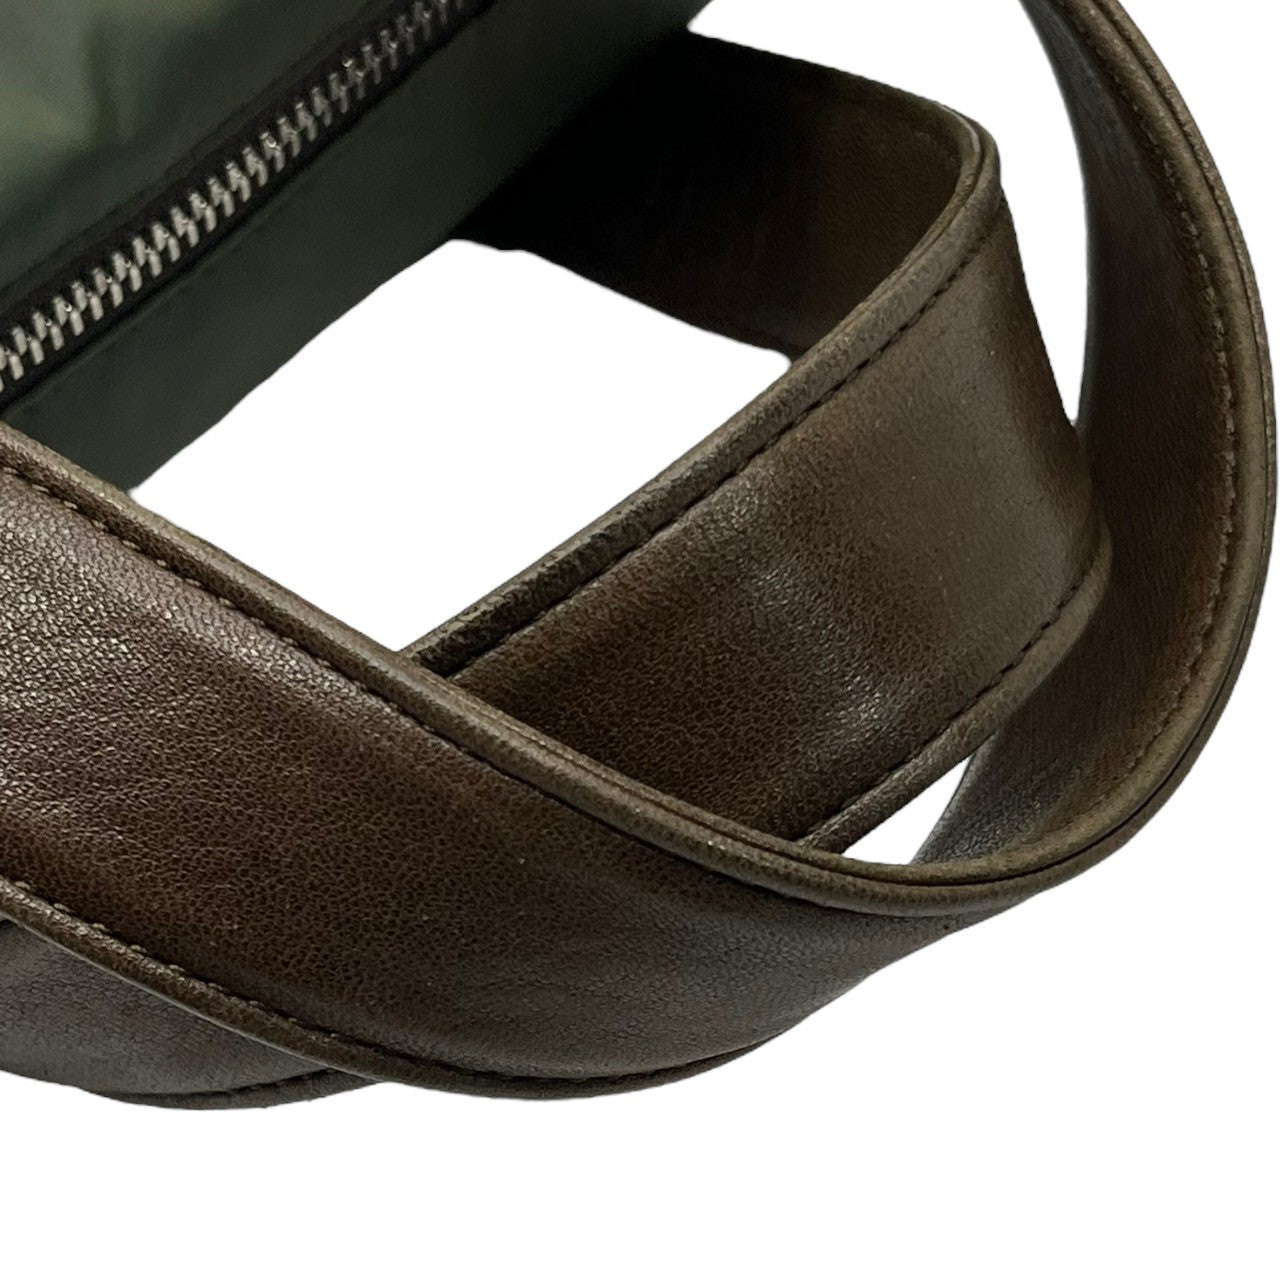 JIL SANDER(ジルサンダー) 00’s nylon leather handbag ナイロン レザー ハンド バッグ トート ブリーフ ケース  オリーブ×ブラウン